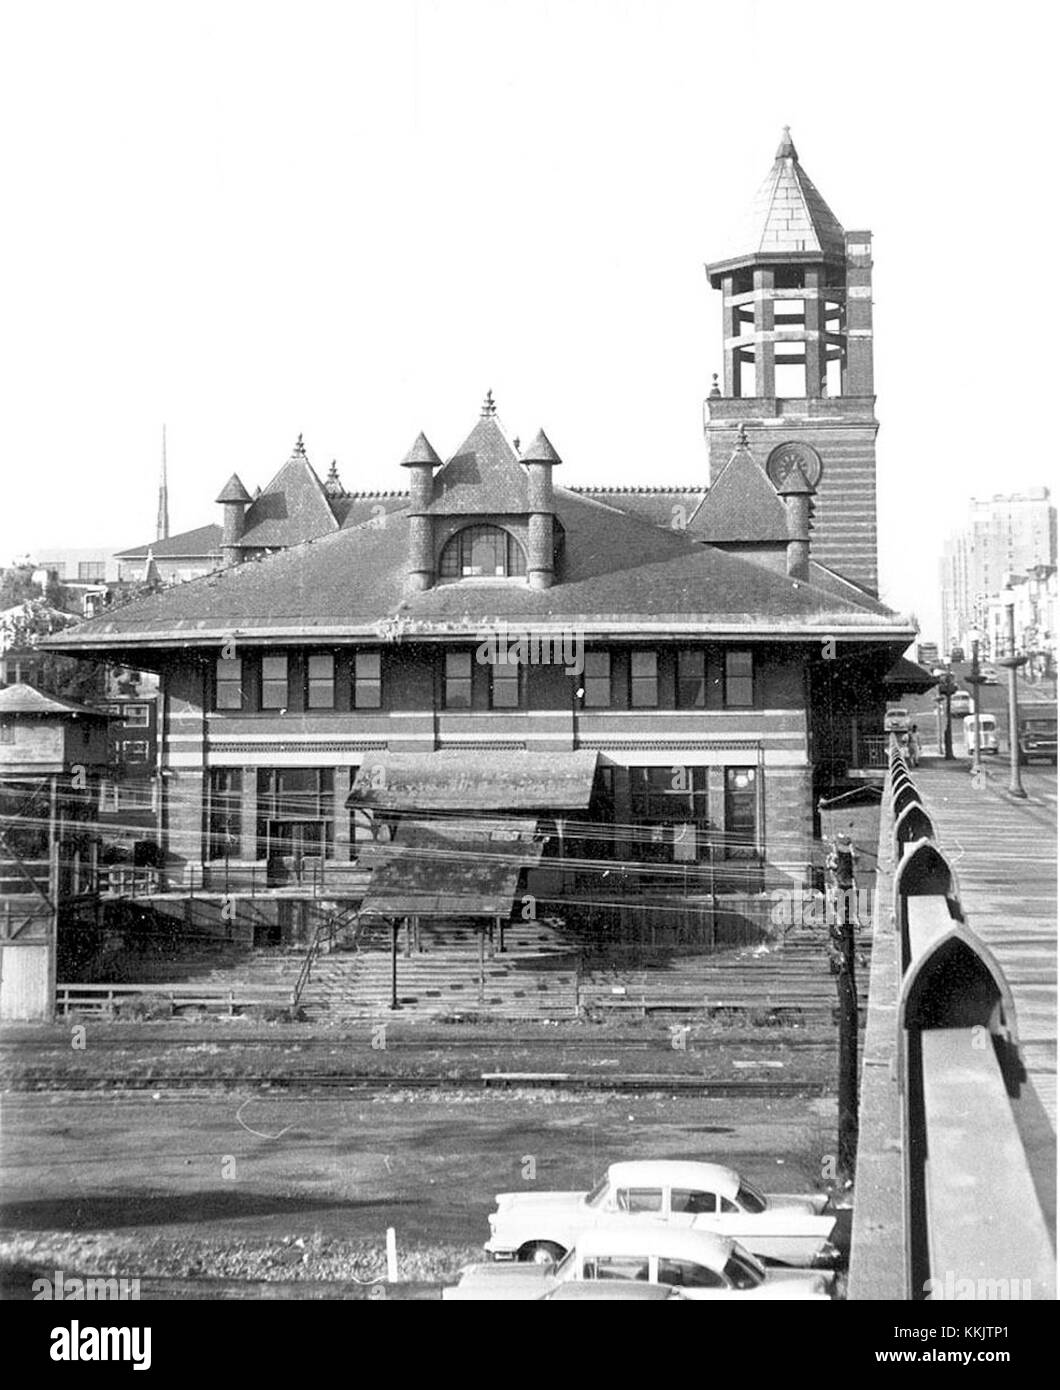 1970 - Lehigh Valley Railroad Station Stock Photo